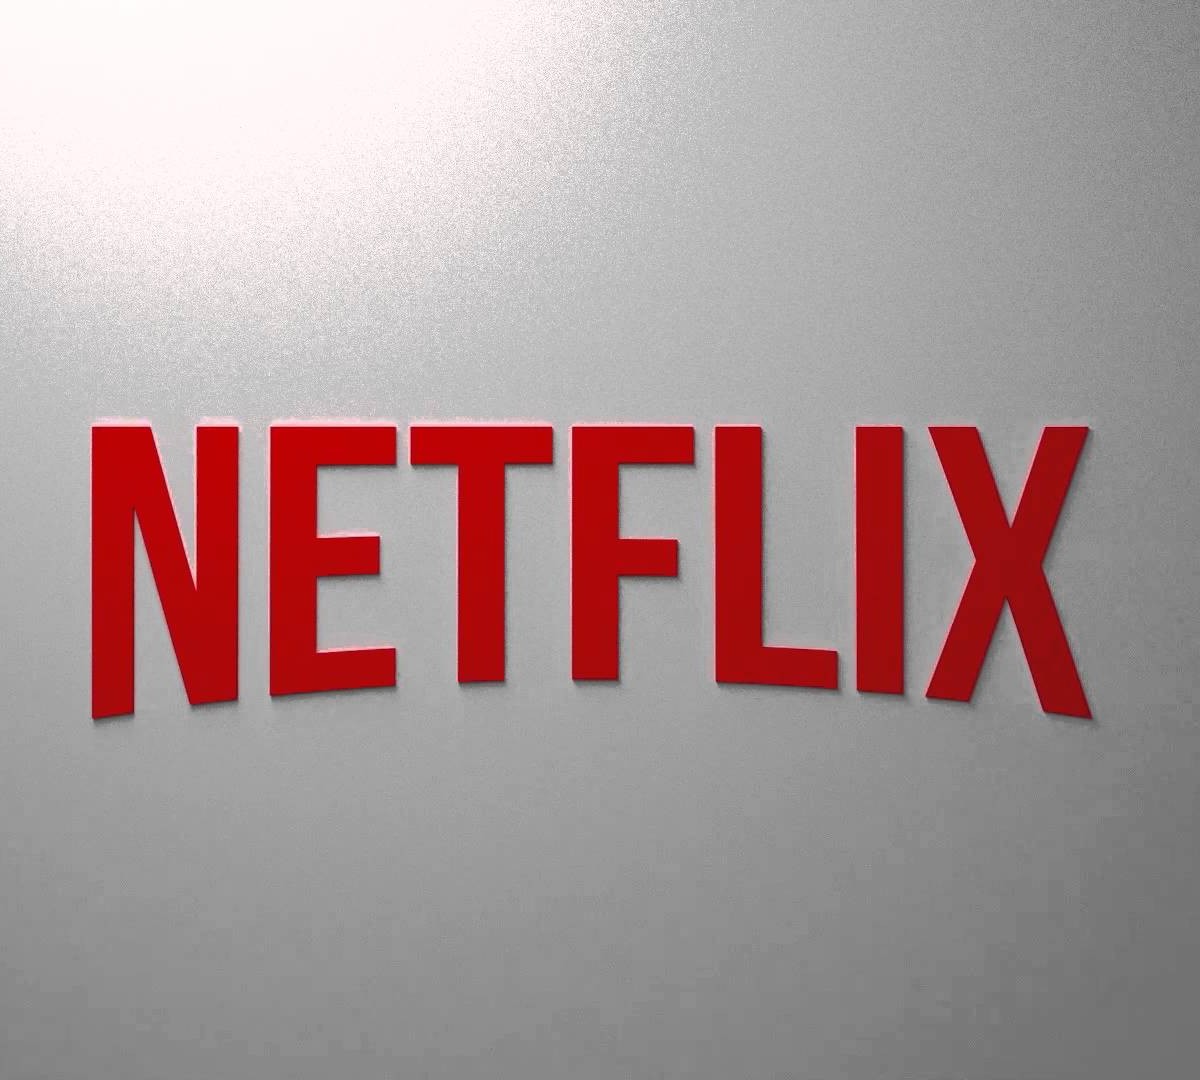 Netflix anuncia segunda temporada de 'B: The Beginning